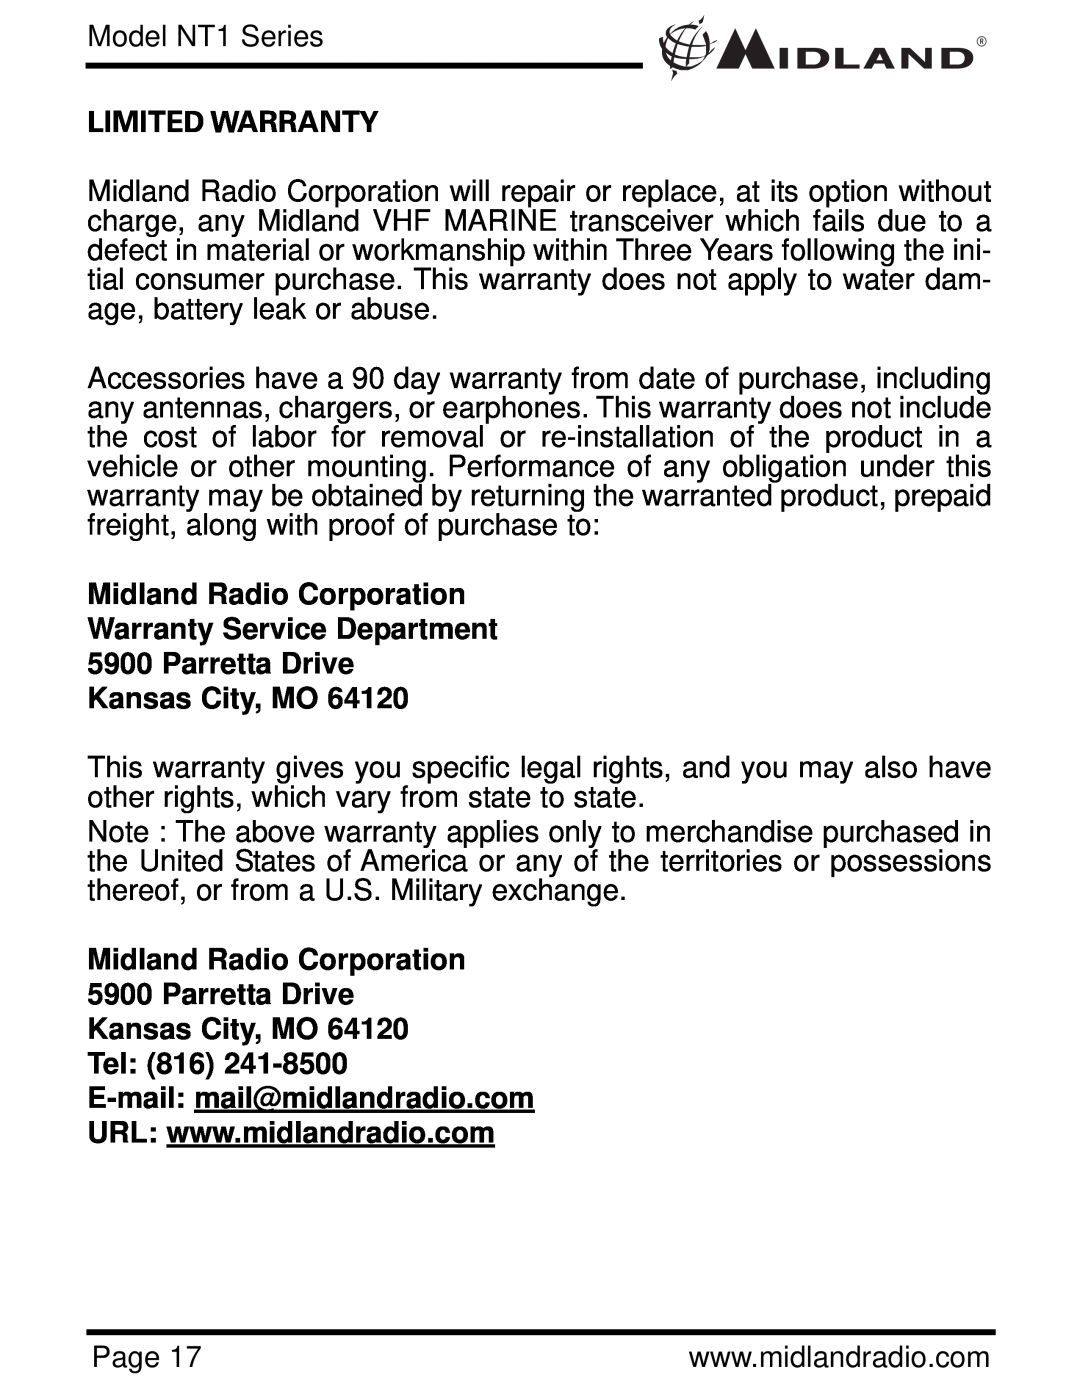 Midland Radio NT1 SERIES, NT1VP Limited Warranty, Midland Radio Corporation Warranty Service Department, Model NT1 Series 